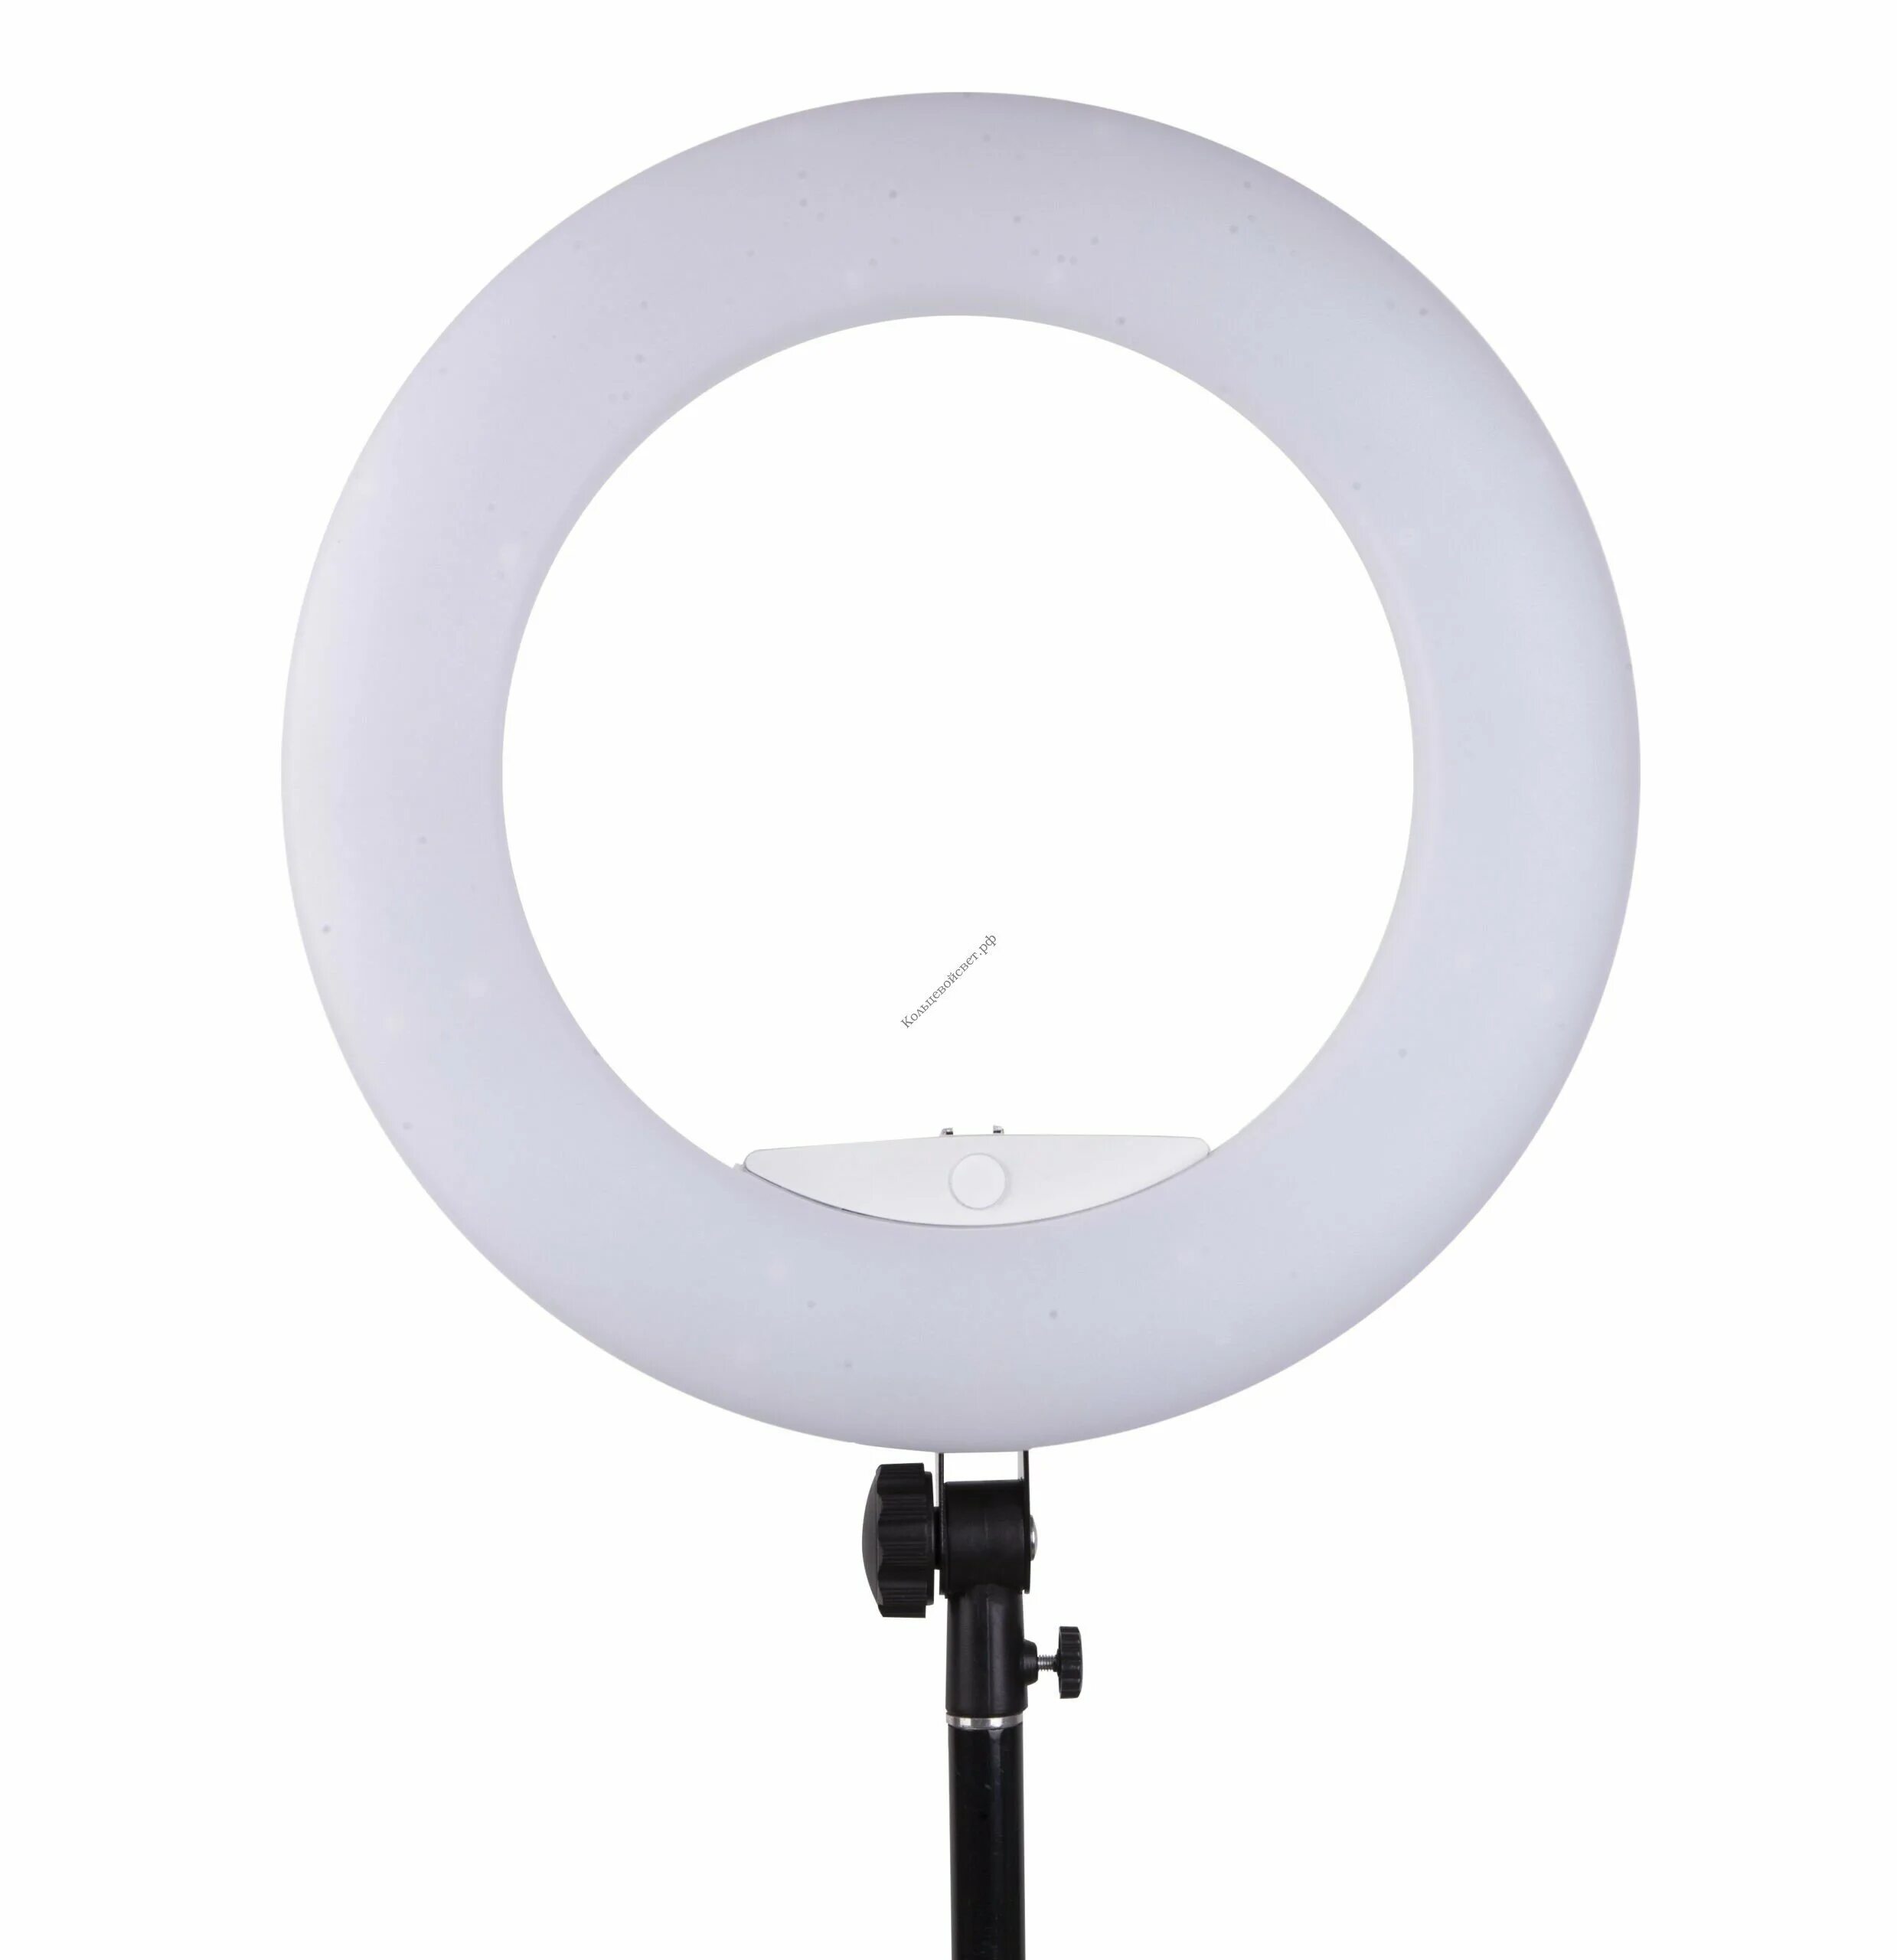 Кольцевая лампа купить озон. Yidoblo FS-480ii Кольцевая лампа. Кольцевая лампа Okira FD 480. Кольцевая лампа Soft Ring Light mj26, 26 см, Black. Кольцевая лампа 45 см со штативом.